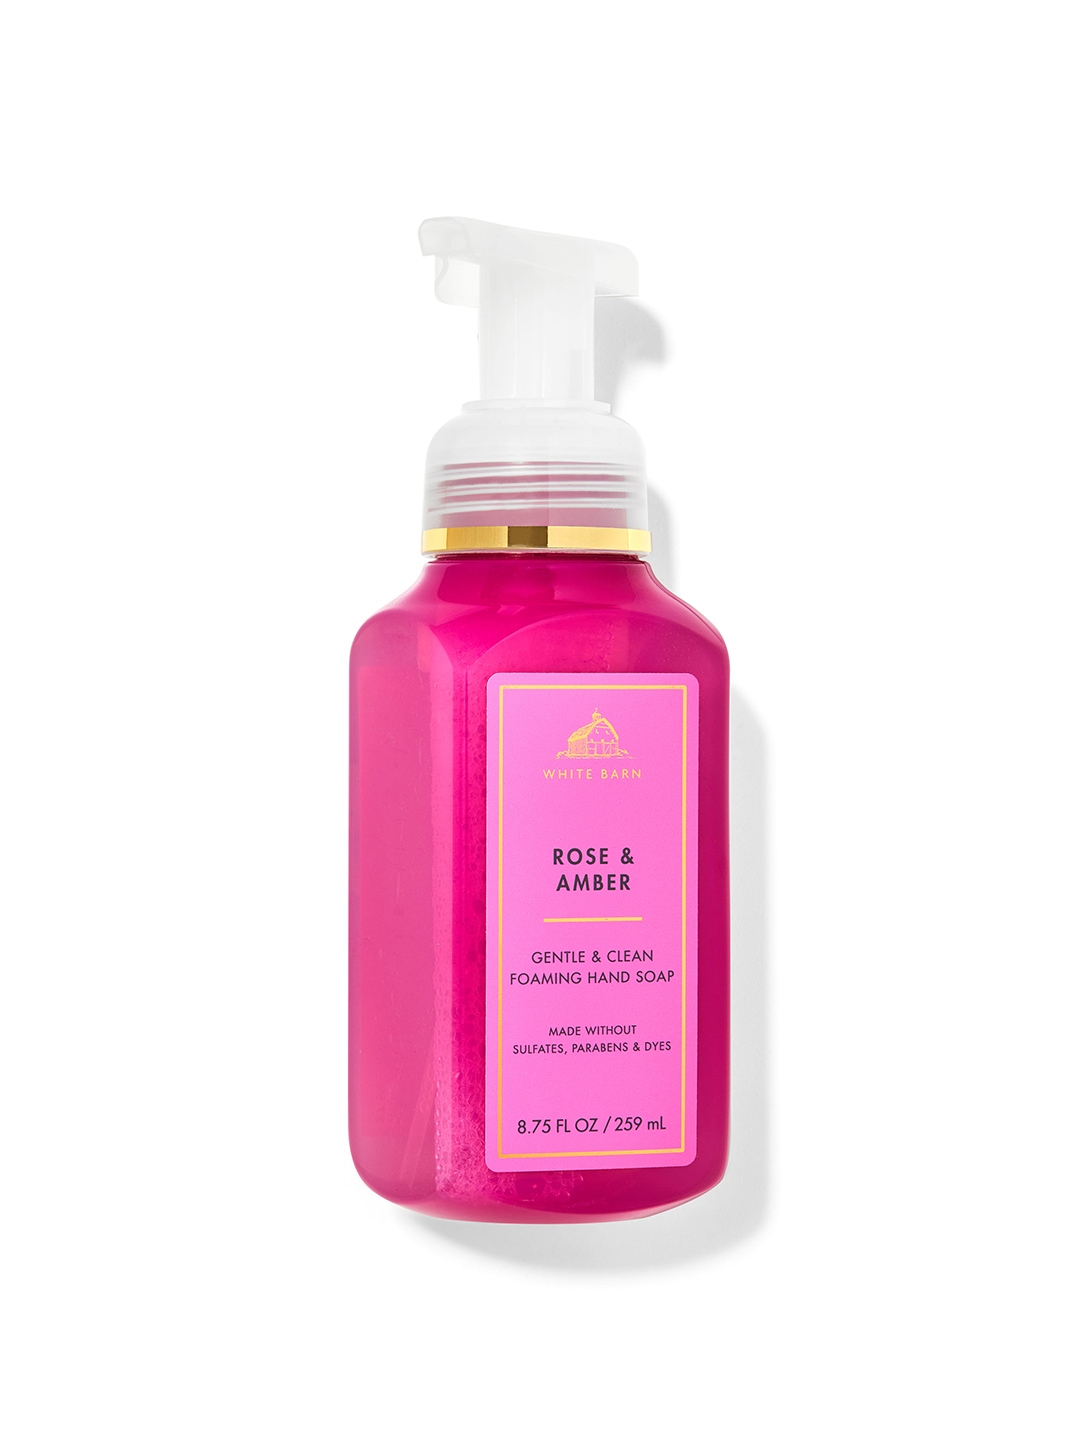 

Bath & Body Works Rose & Amber Gentle & Clean Foaming Hand Soap - 259 ml, Pink